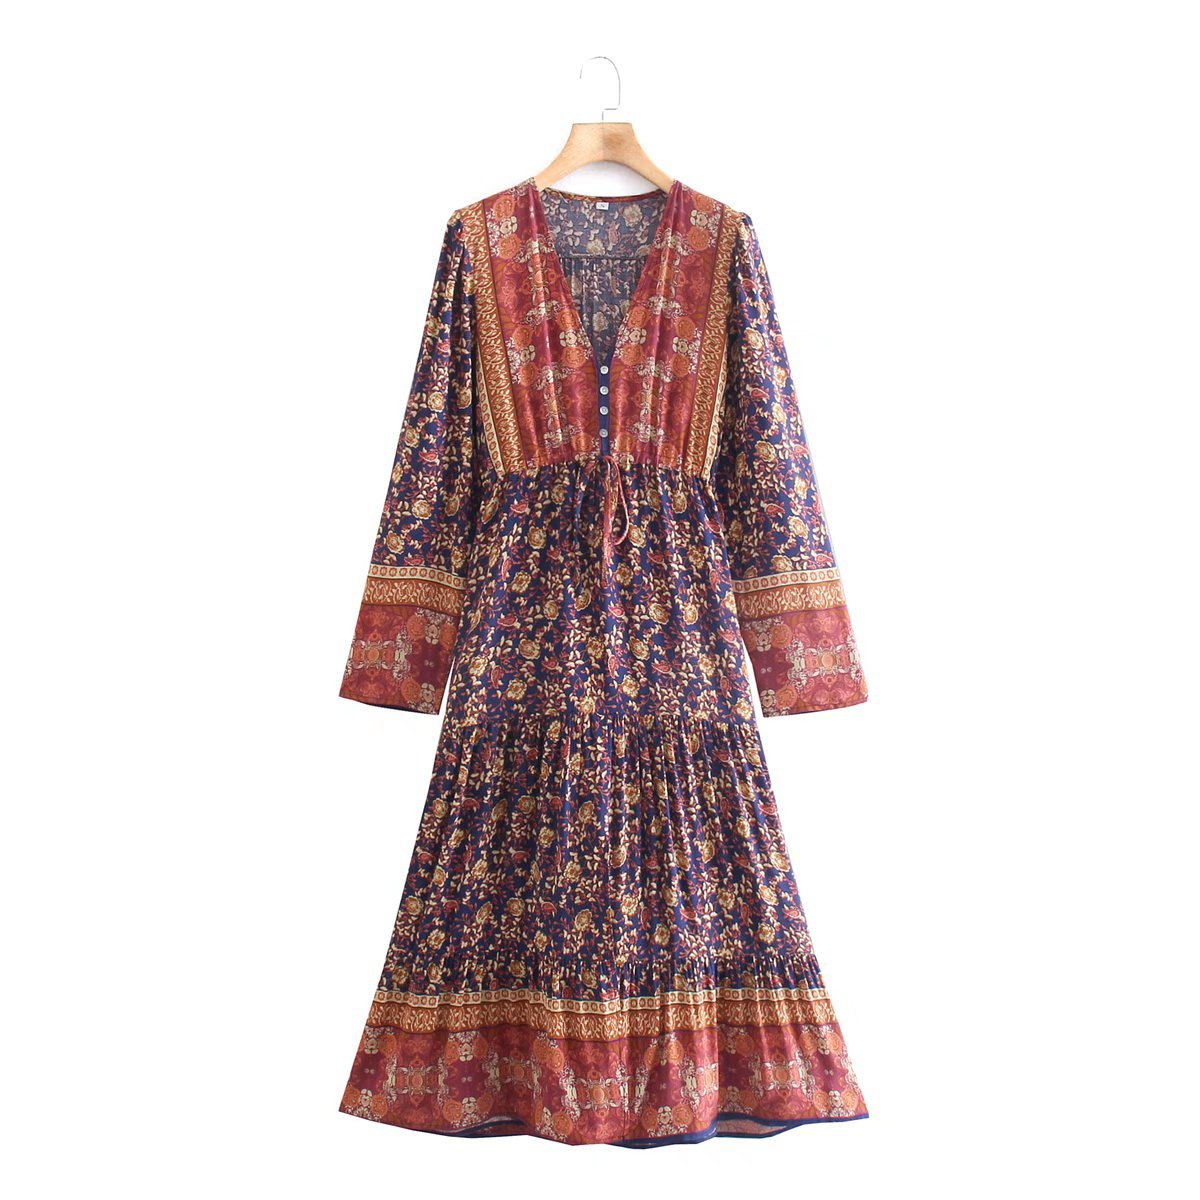 Boho Vintage Maxi Dress V Neck Long Sleeve Floral Print Woman Dress Holiday Festival Vestidos Casual Women Dress alx